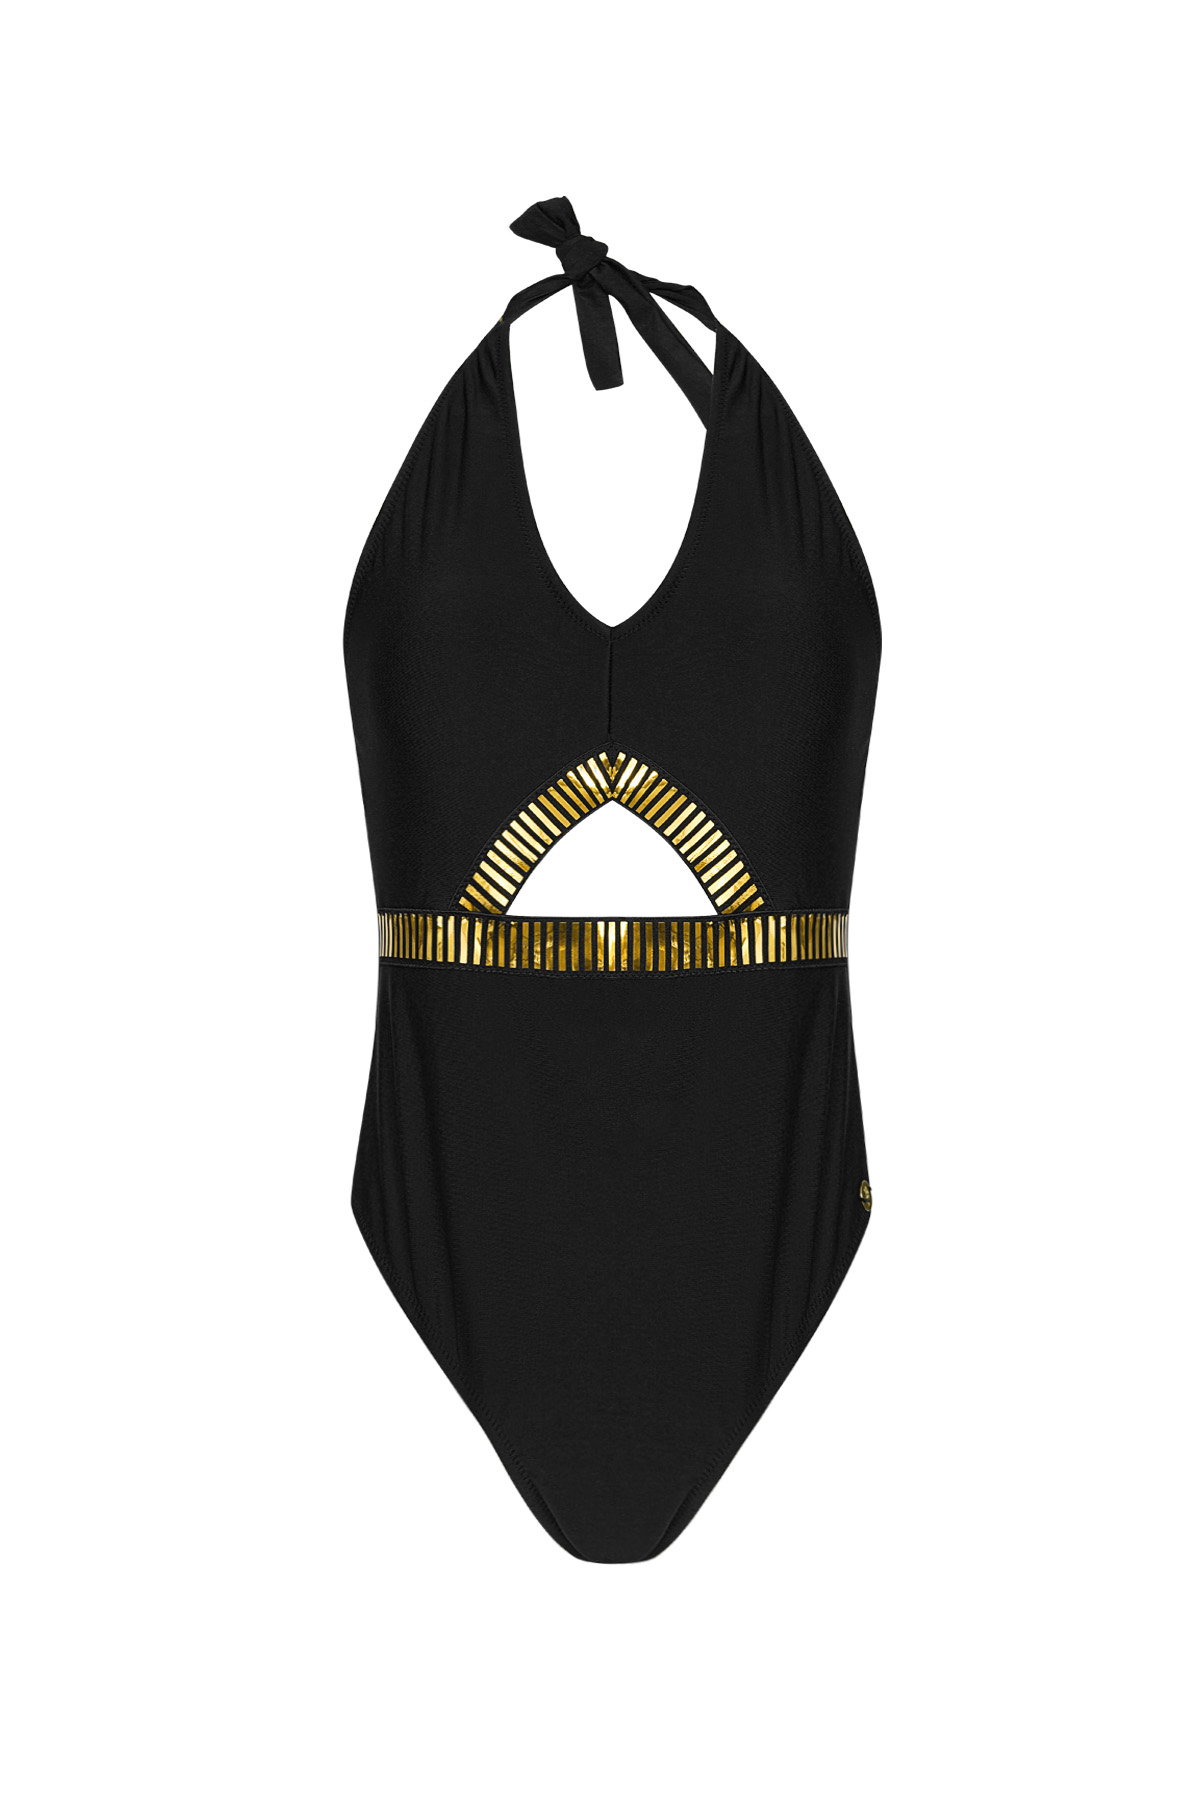 Swimsuit gold stripes - black S 